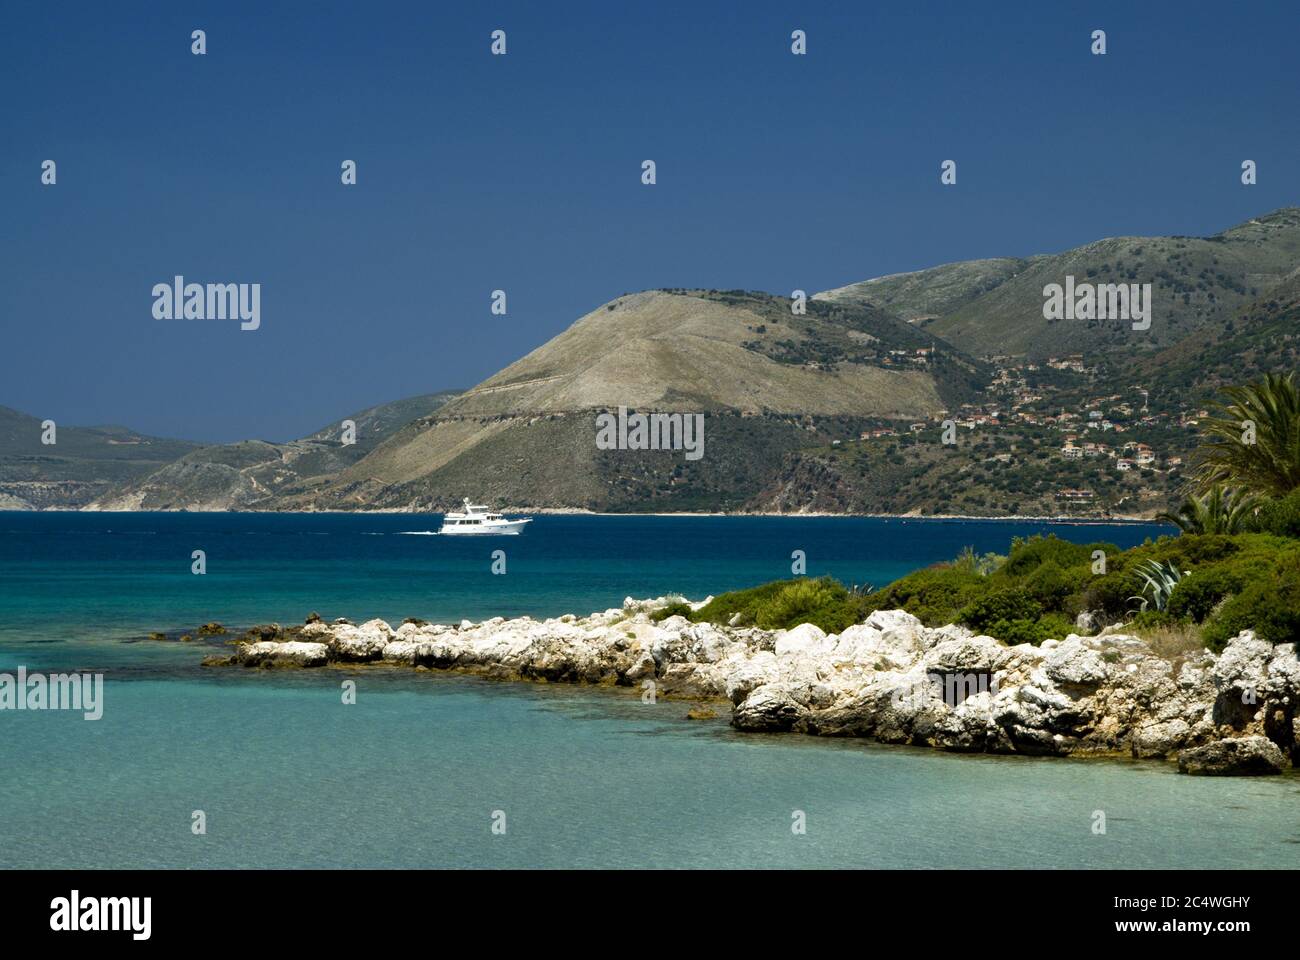 Beach with mountains in distance, Fanari, Argostoli, Kefalonia, Ionian Islands, Greece. Stock Photo